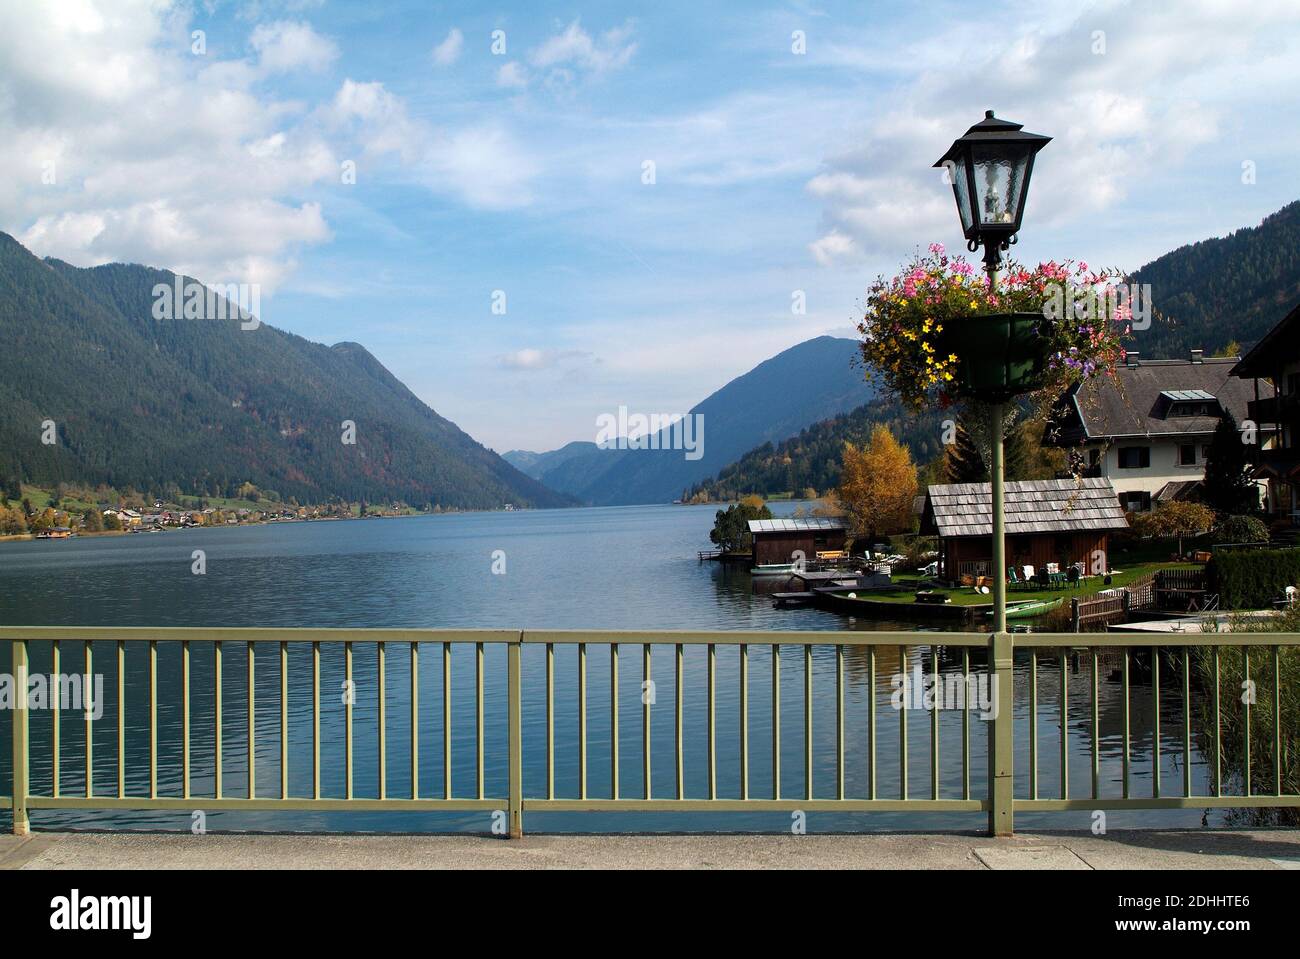 Austria, Carinthia, bridge over Weissensee lake with flower covered lantern Stock Photo